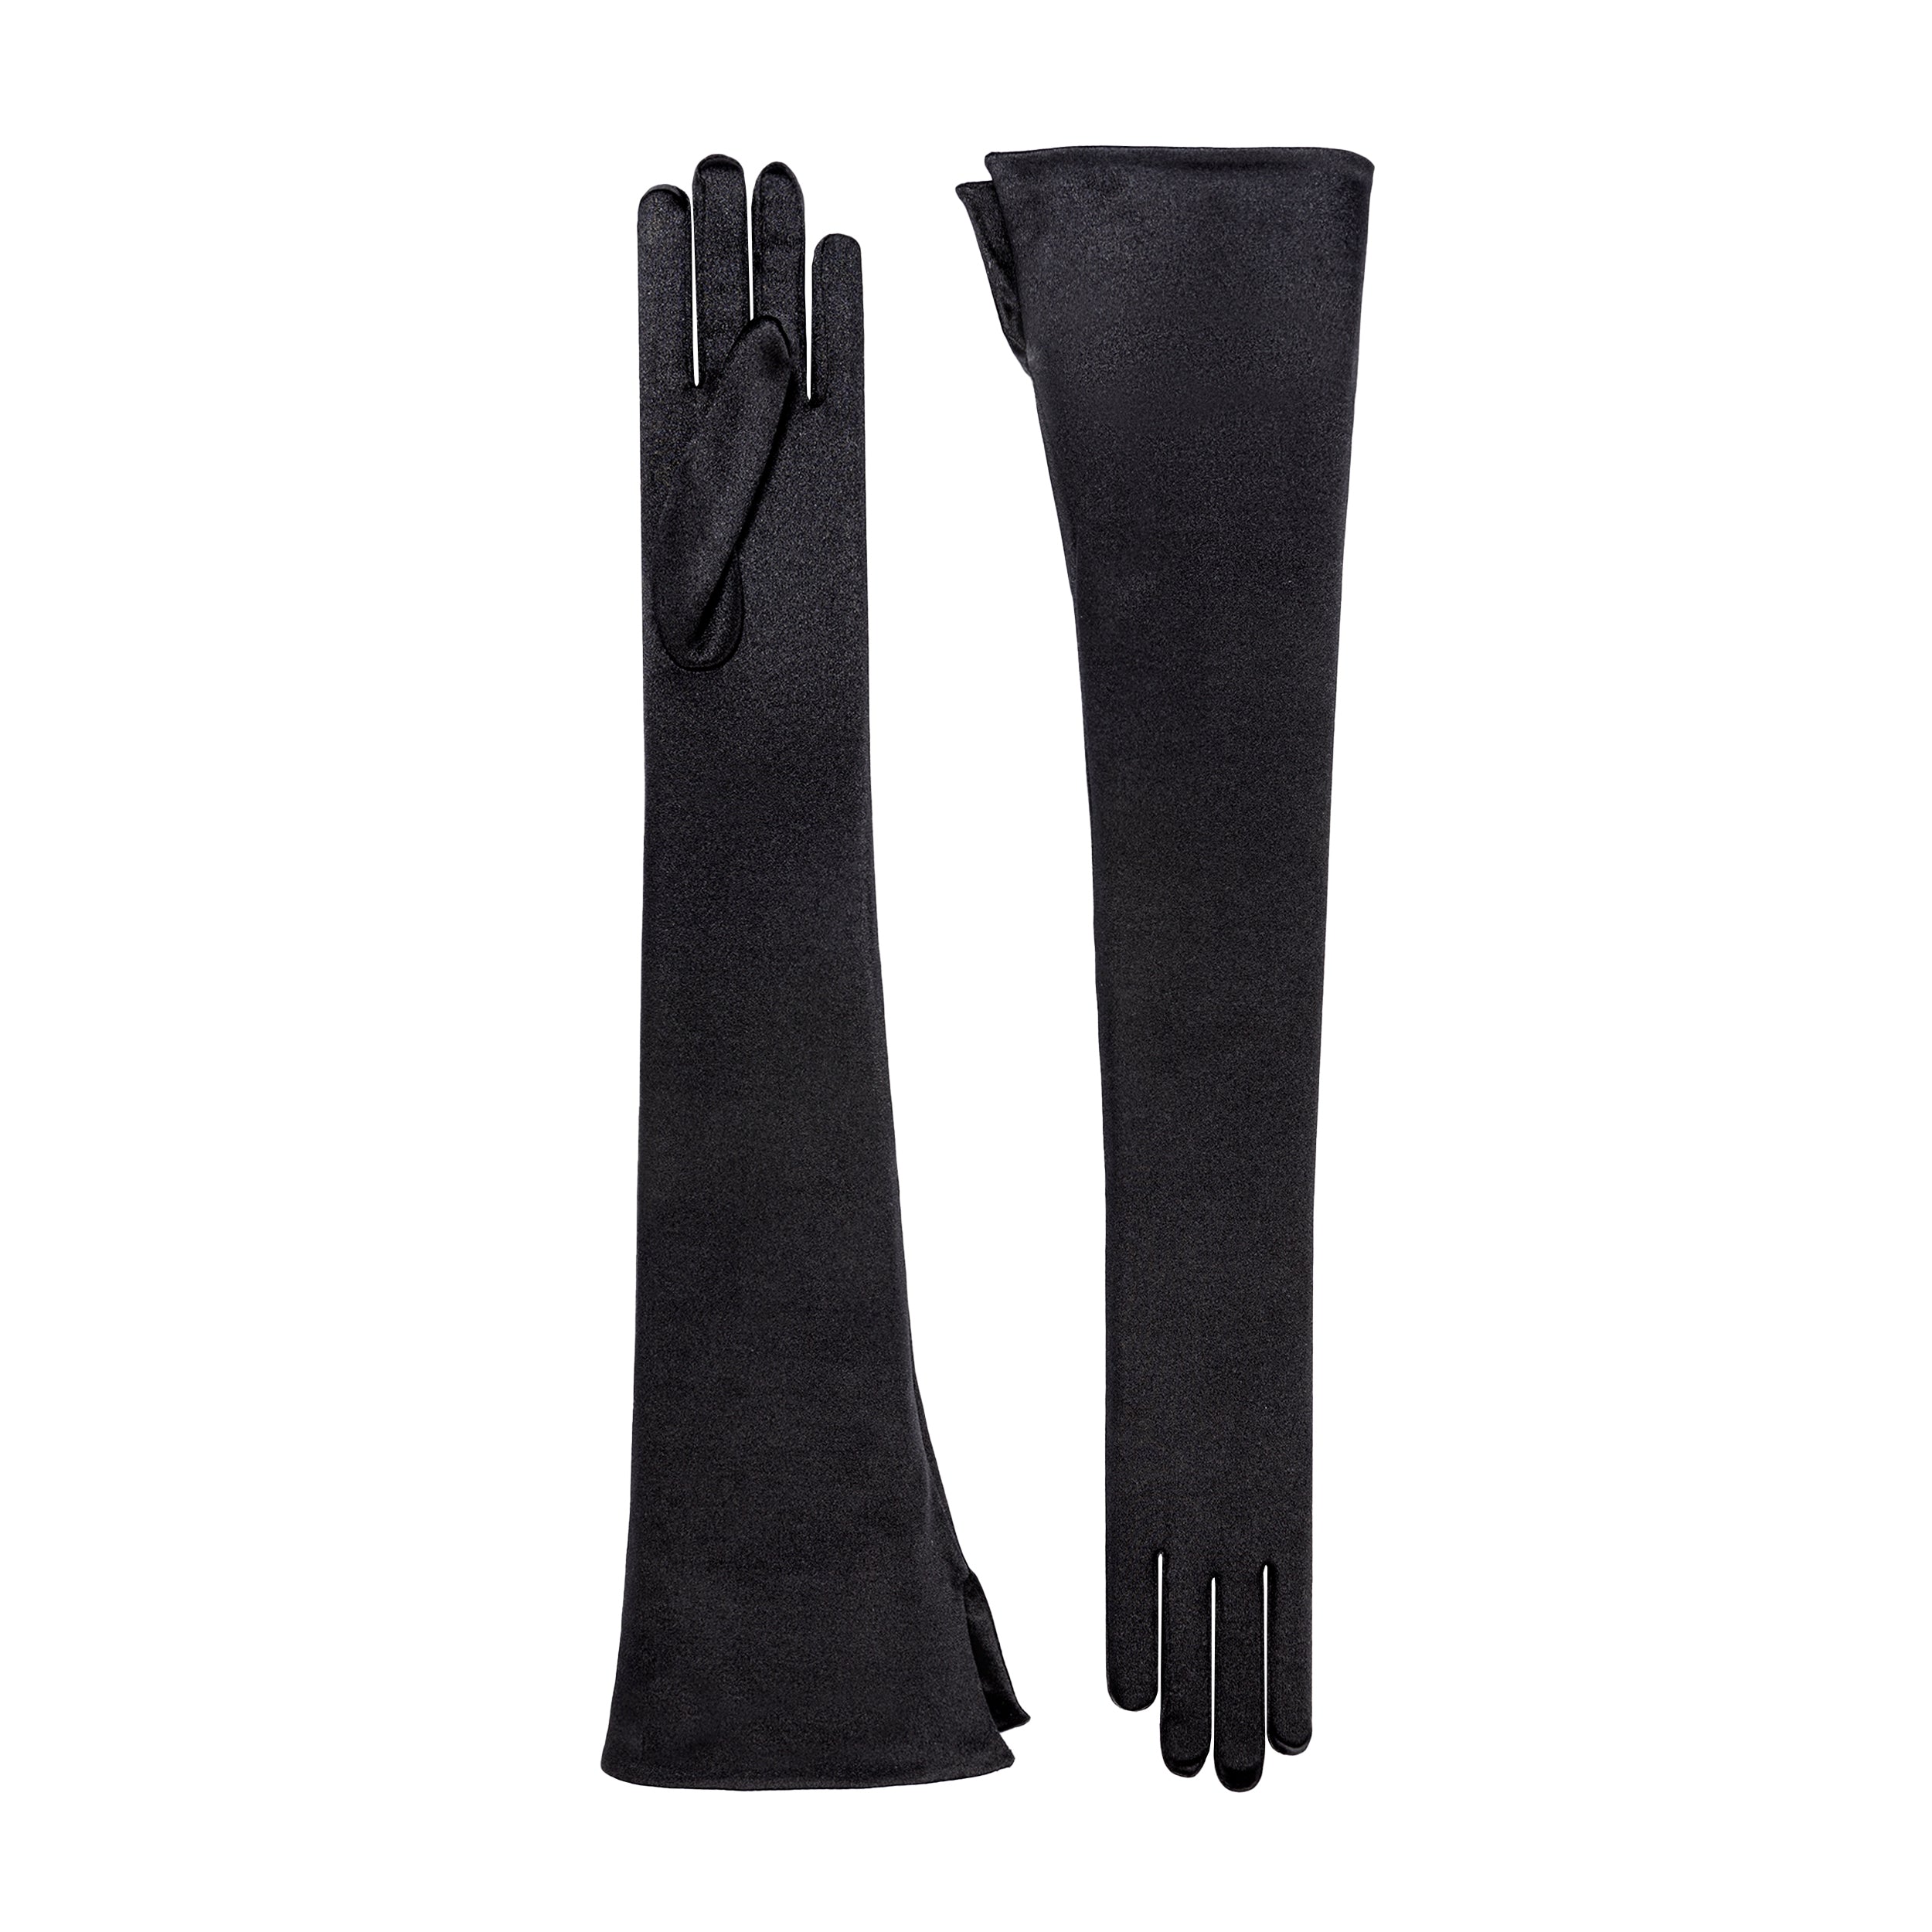 Cornelia James - Black - Size Large (8½) - Handmade Satin Gloves by Cornelia James